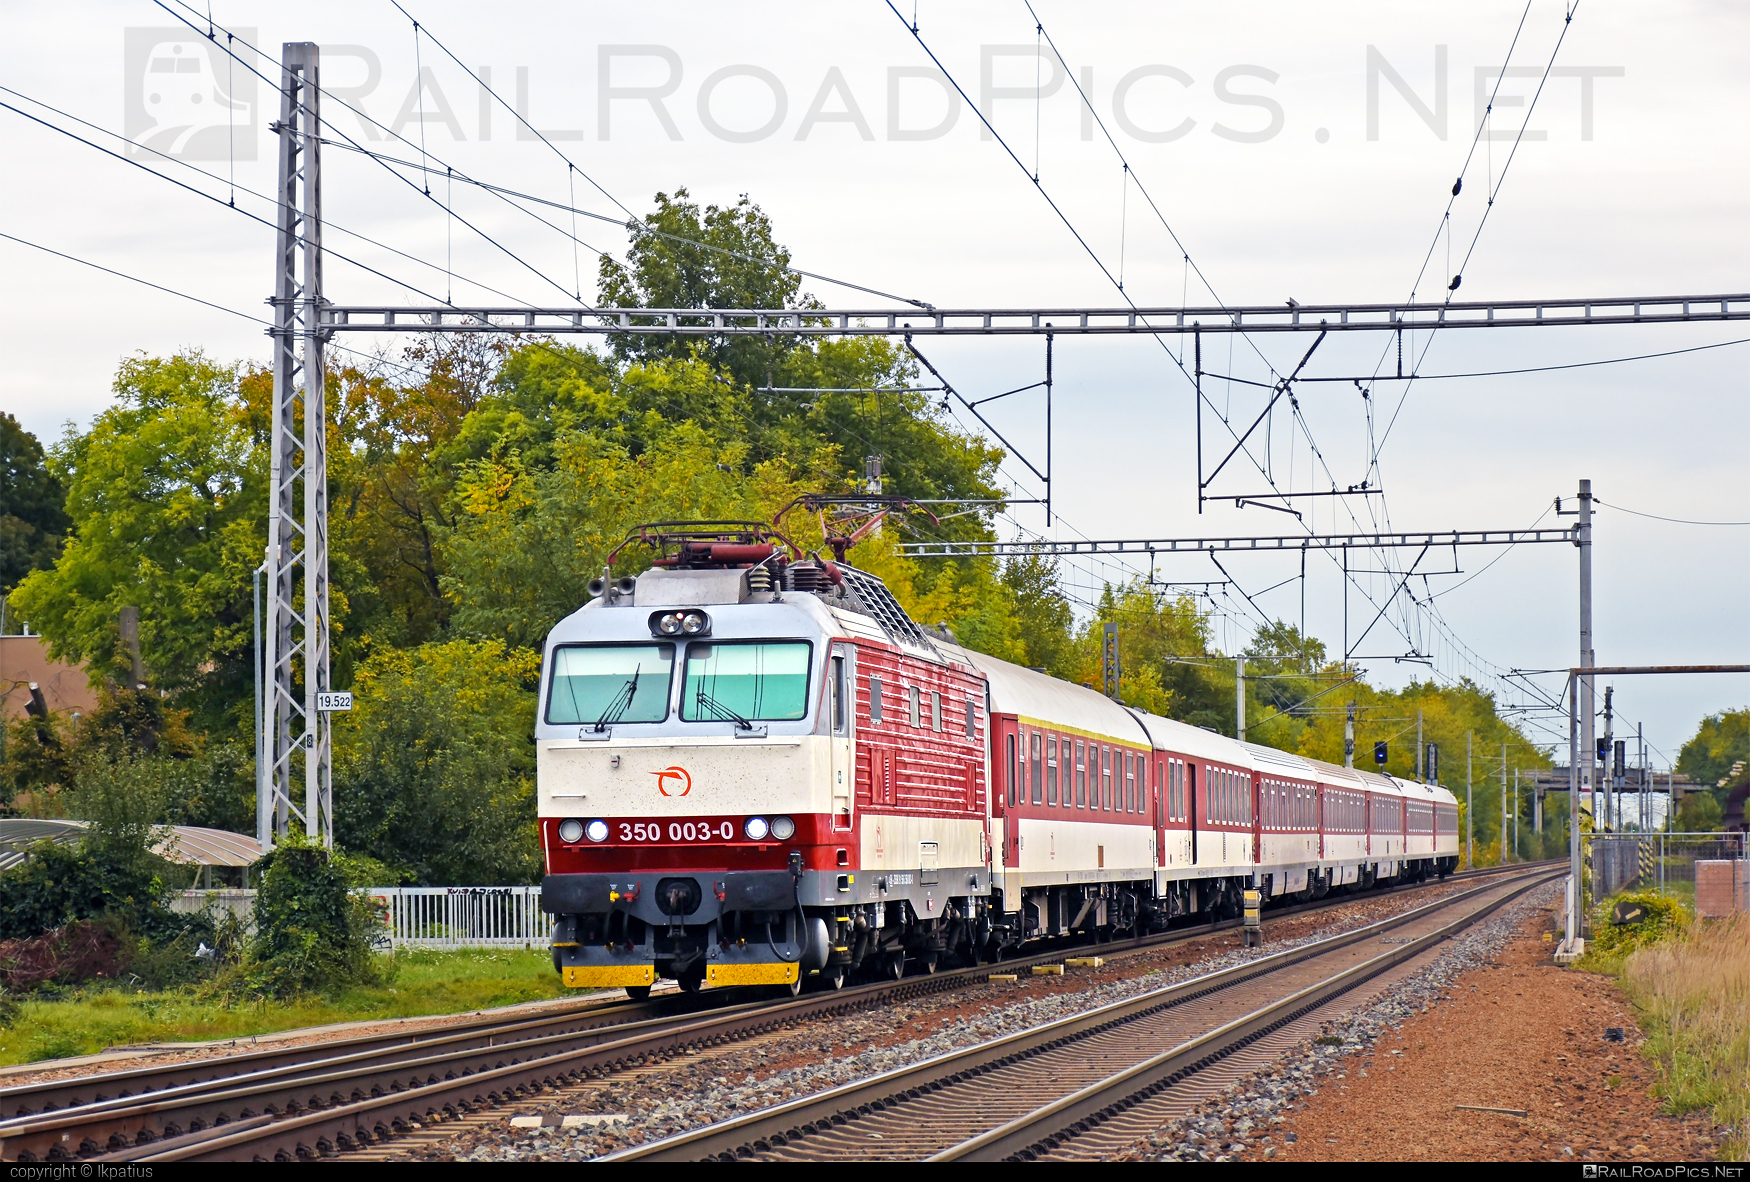 Škoda 55E - 350 003-0 operated by Železničná Spoločnost' Slovensko, a.s. #ZeleznicnaSpolocnostSlovensko #gorila #locomotive350 #skoda #skoda55e #zssk